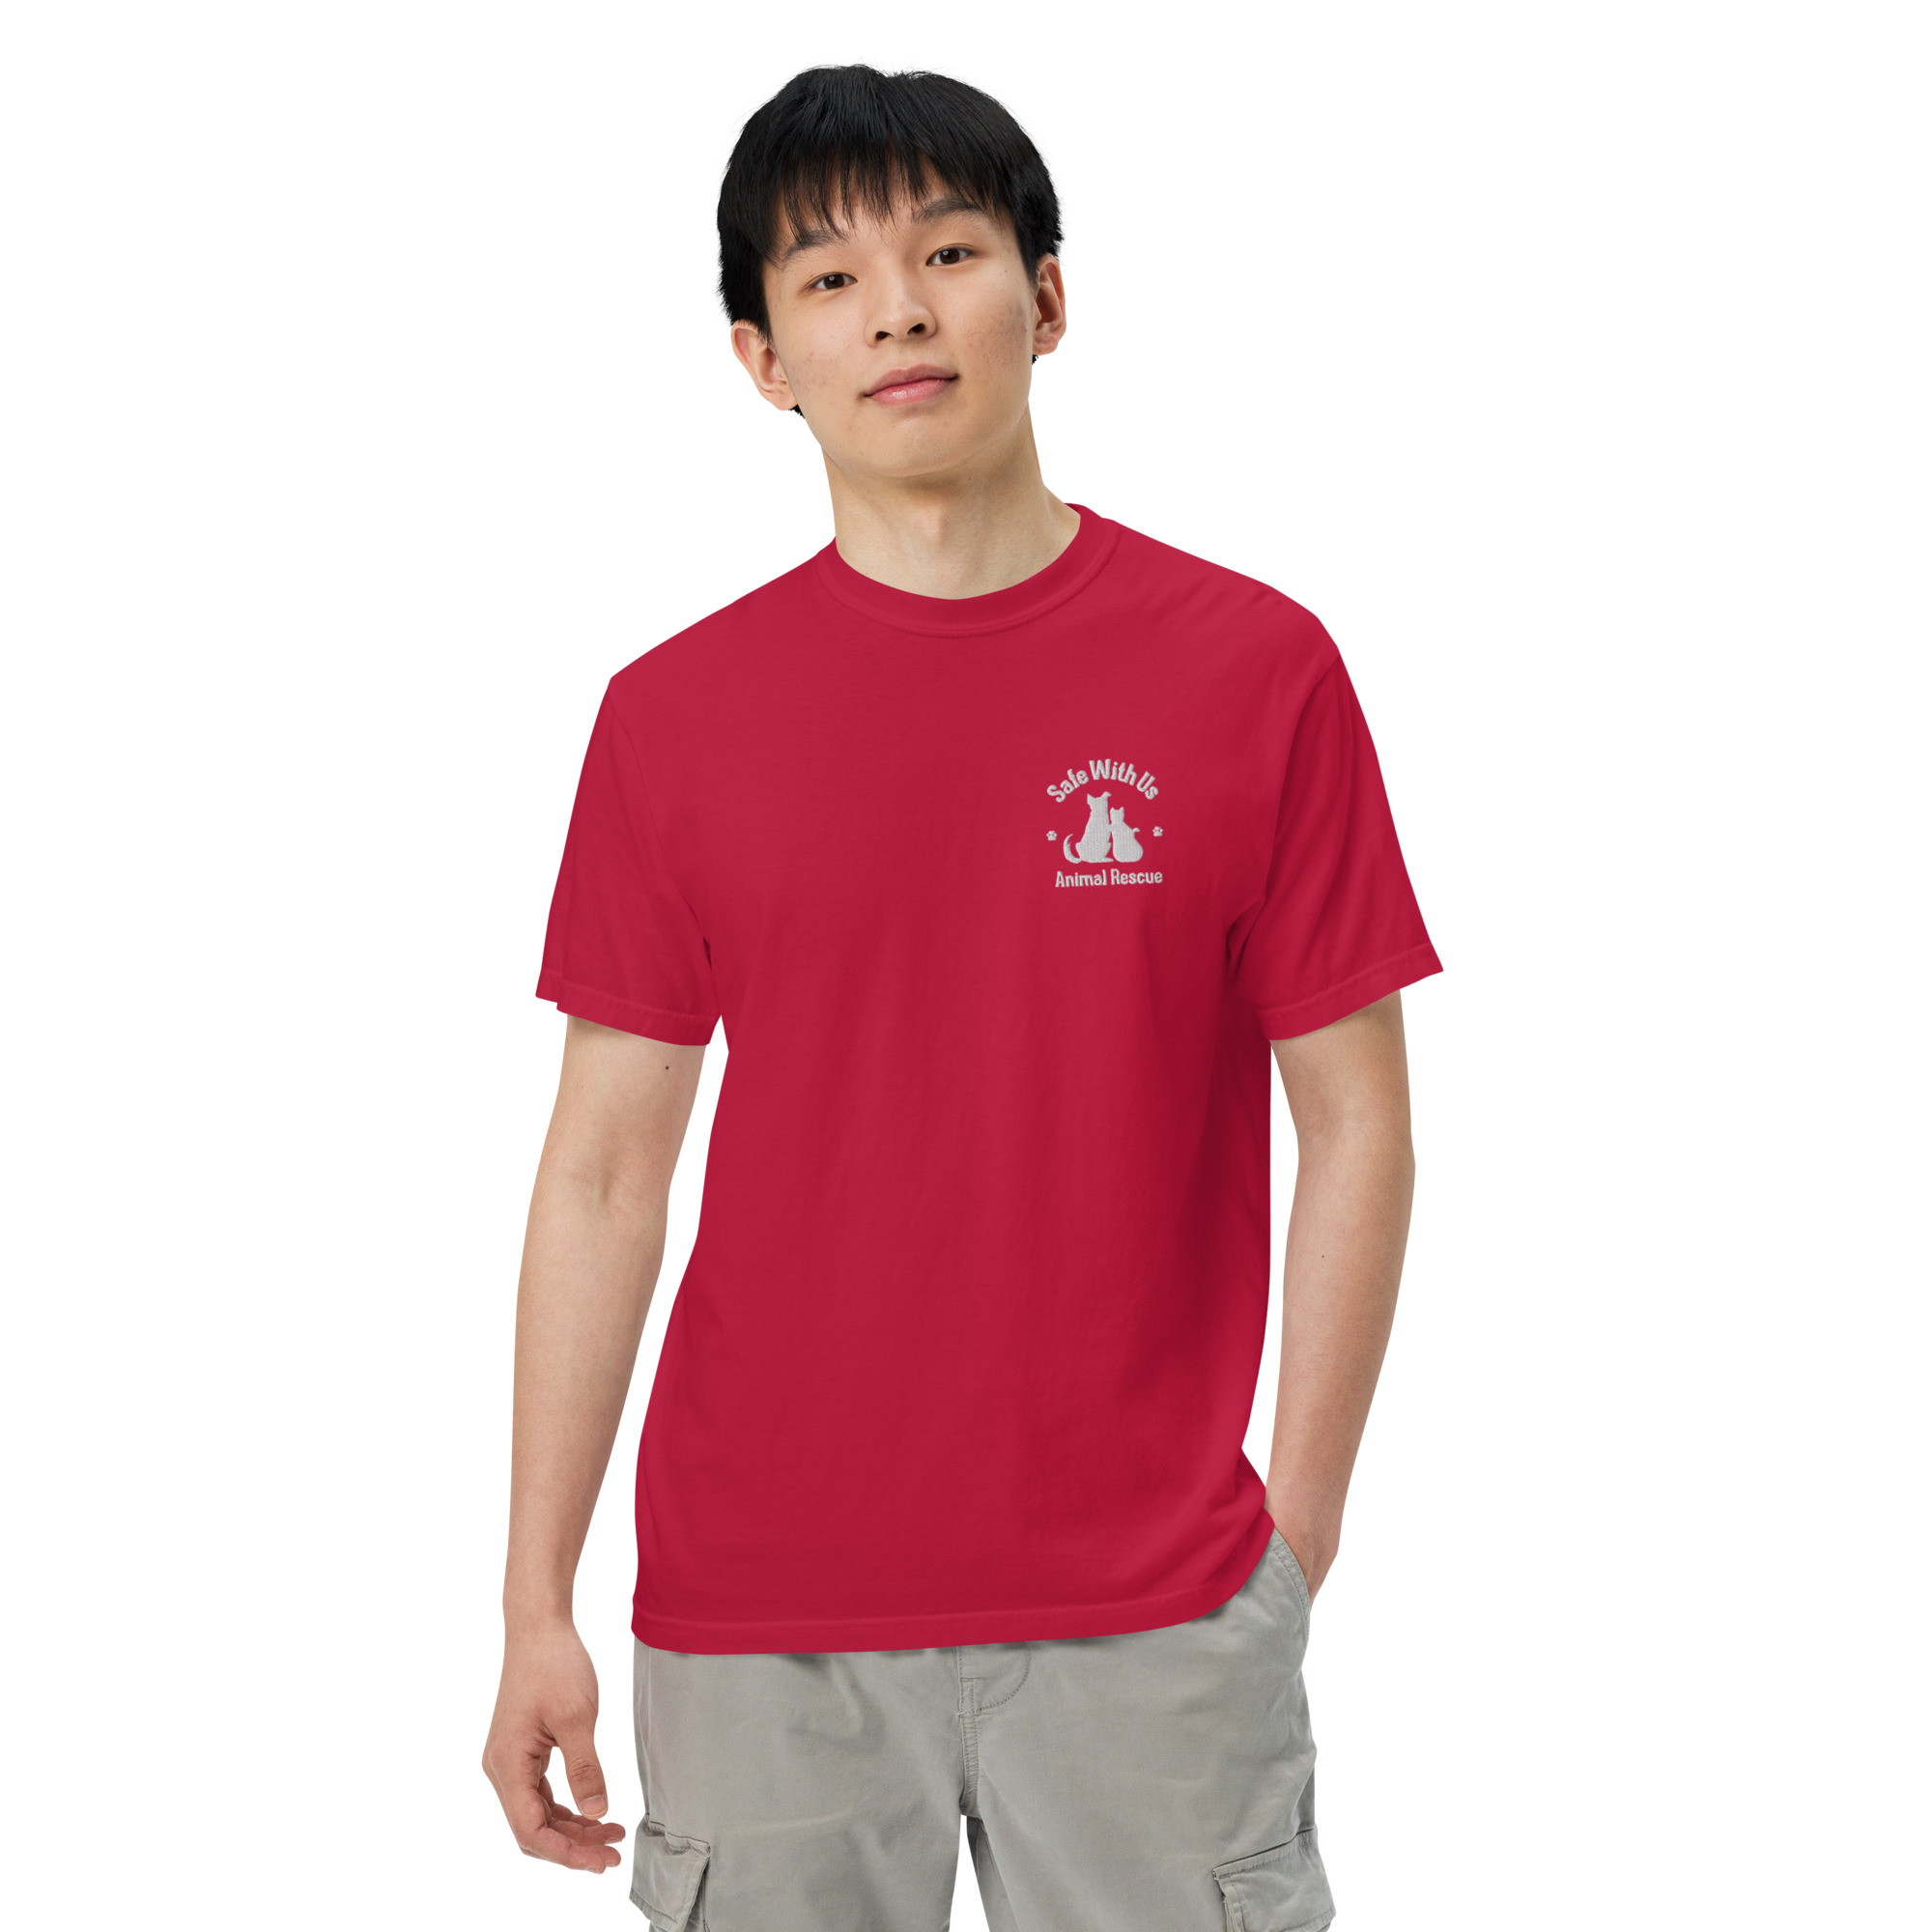 mens-garment-dyed-heavyweight-t-shirt-red-front-2-6415fedc24c44-1.jpg